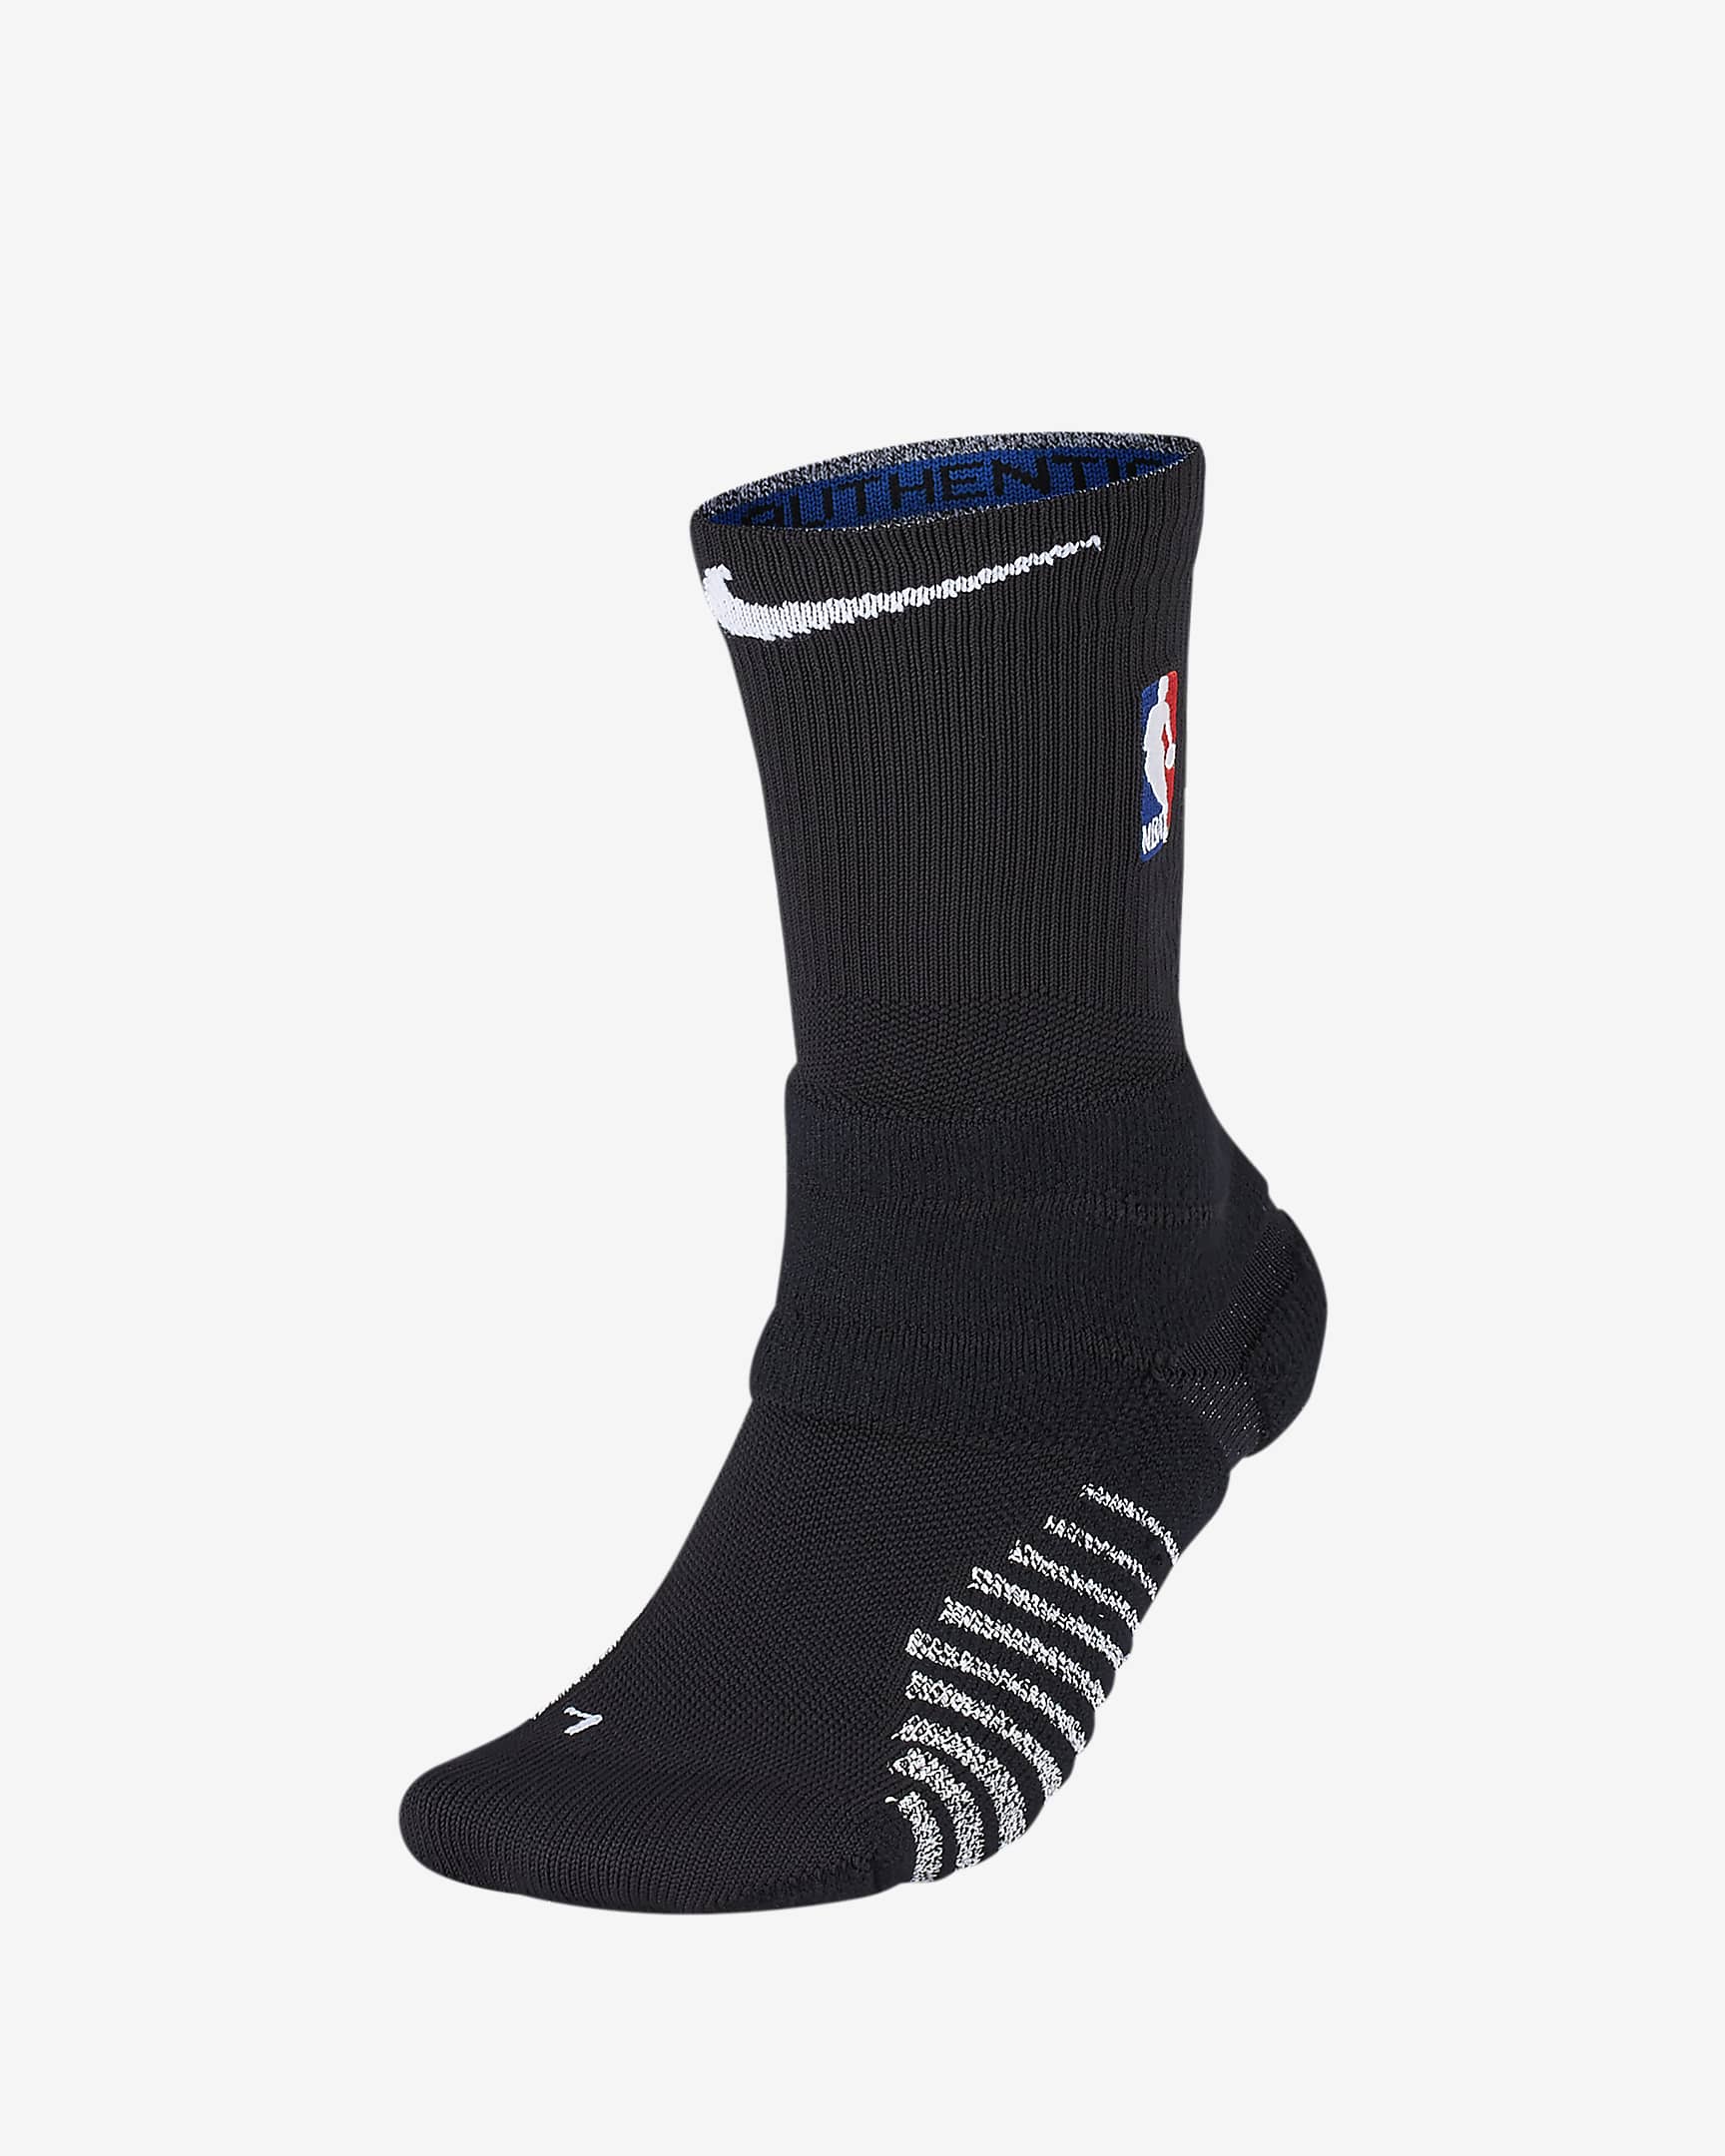 Calcetines largos de la NBA NikeGrip Power. Nike.com